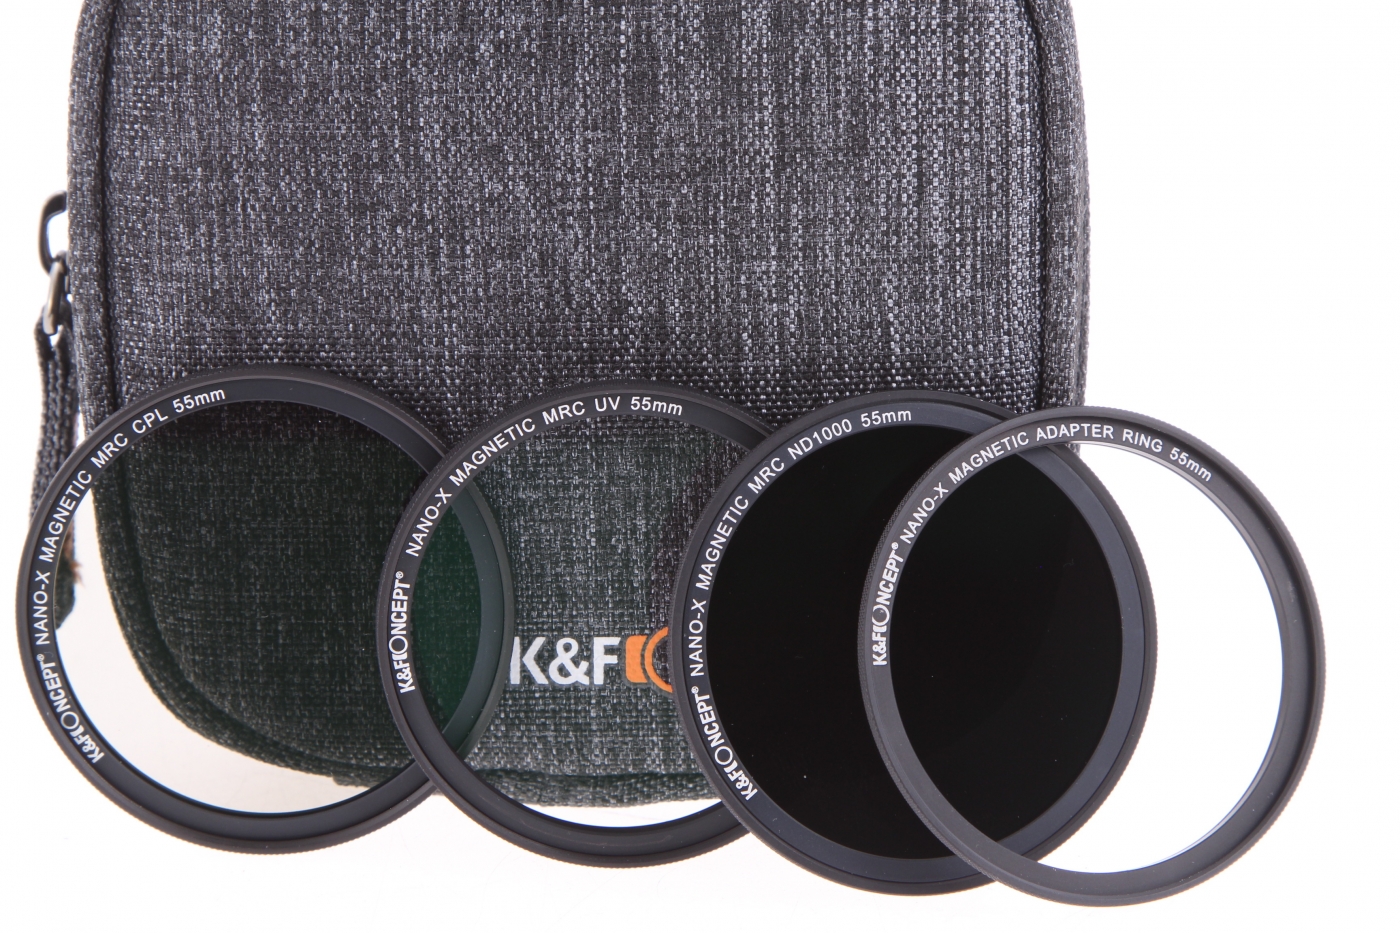 Zestaw 3 filtrów K&F Concept